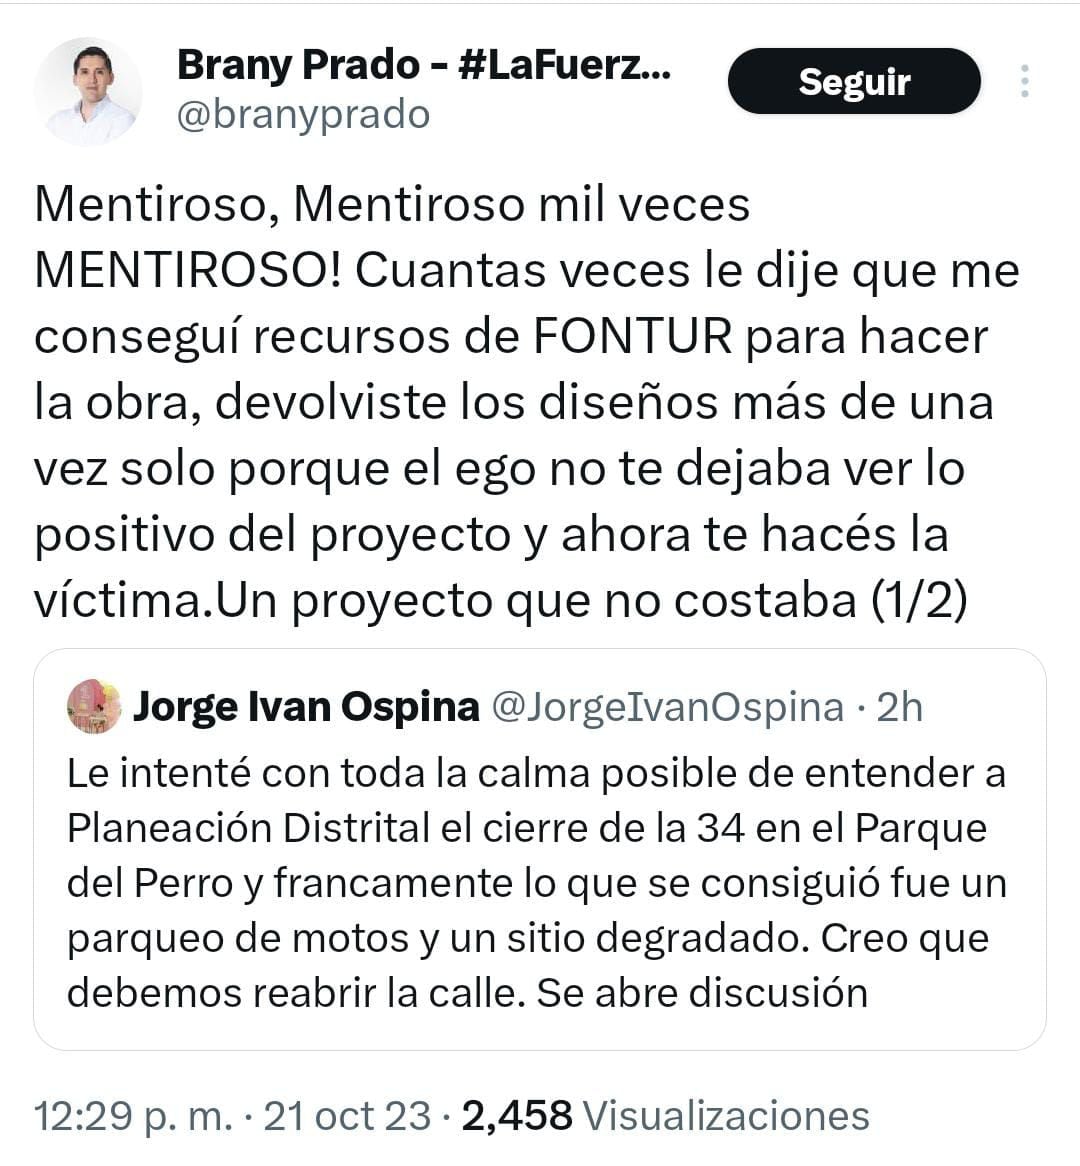 El exdirector de Acodrés, Brany Prado, criticó las declaraciones del alcalde Jorge Iván Ospina.